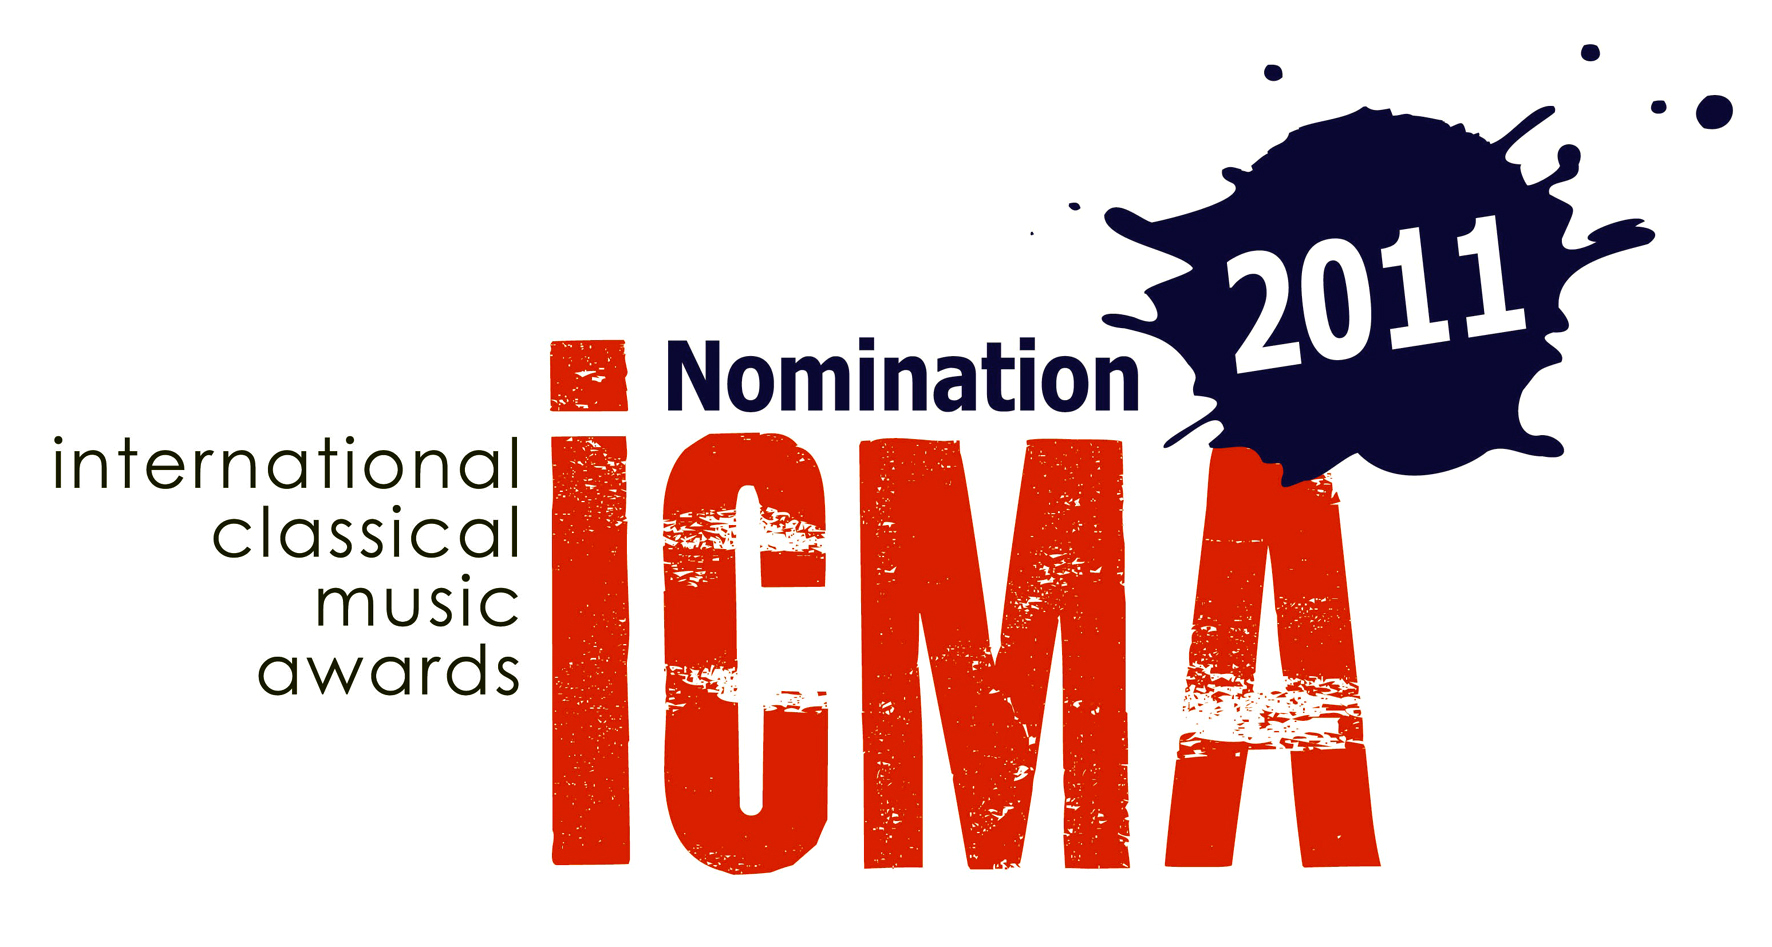 ICMA Nomination 2011